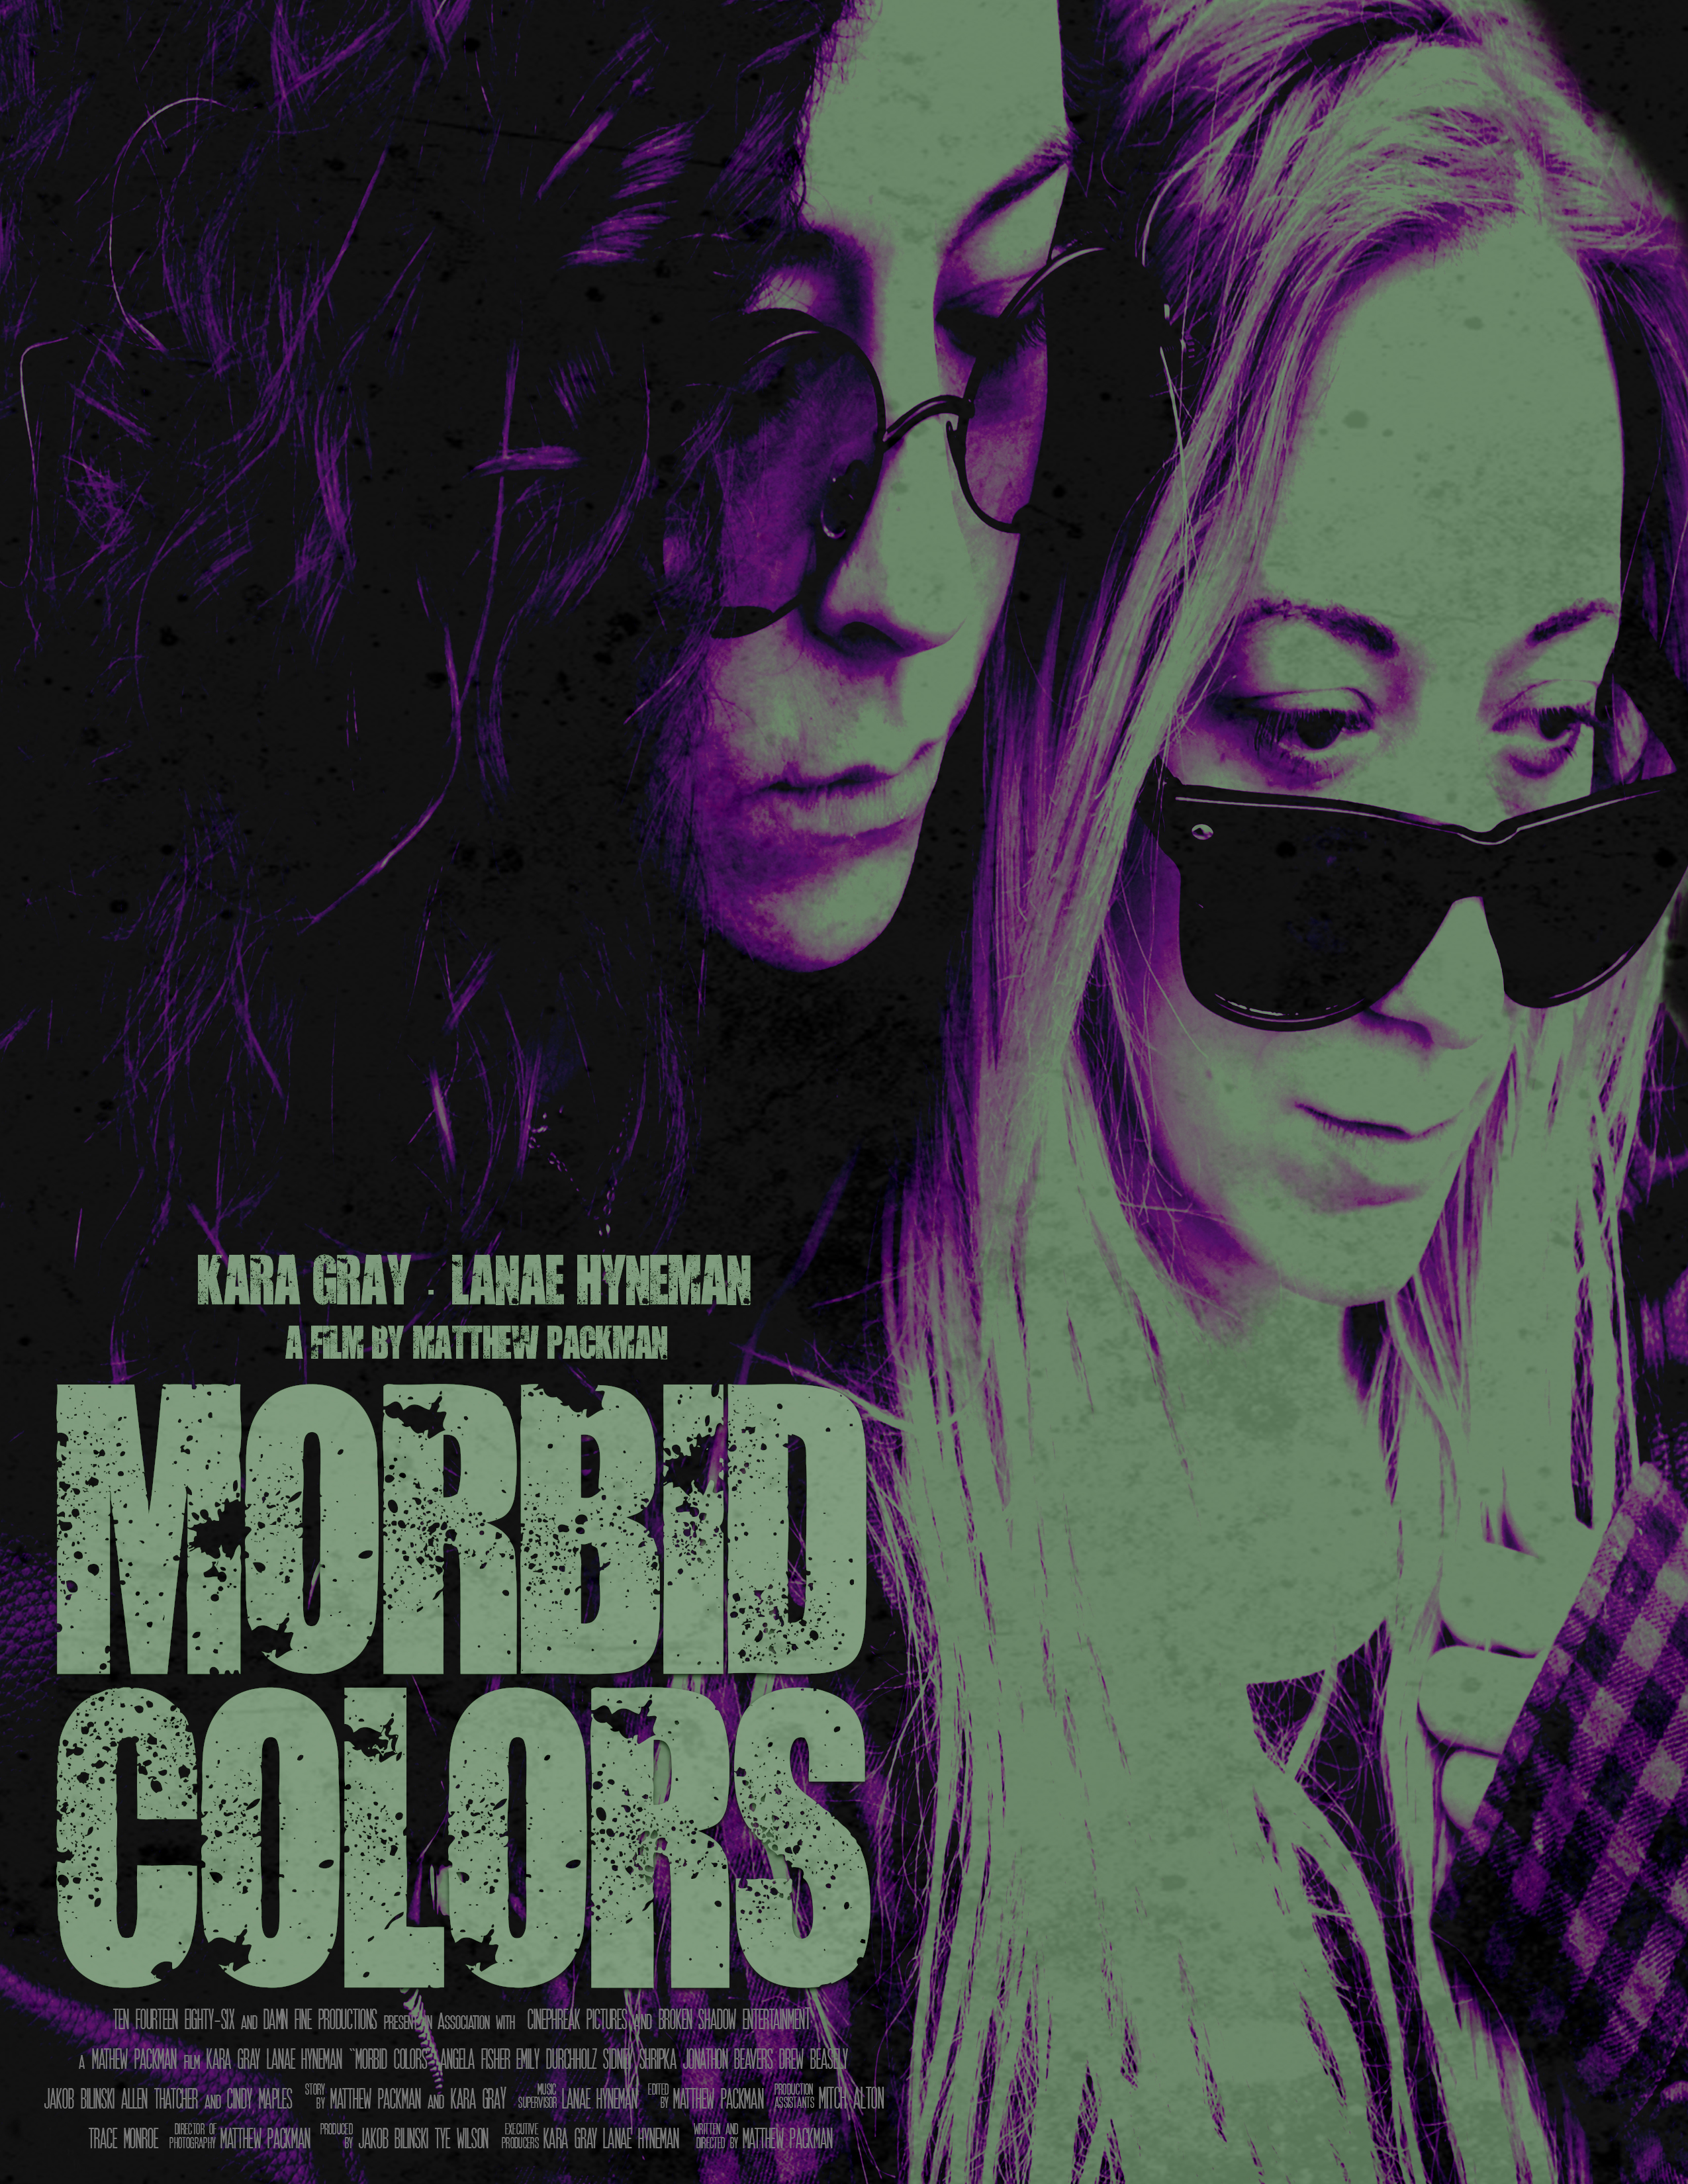 Morbid Colors (2021)